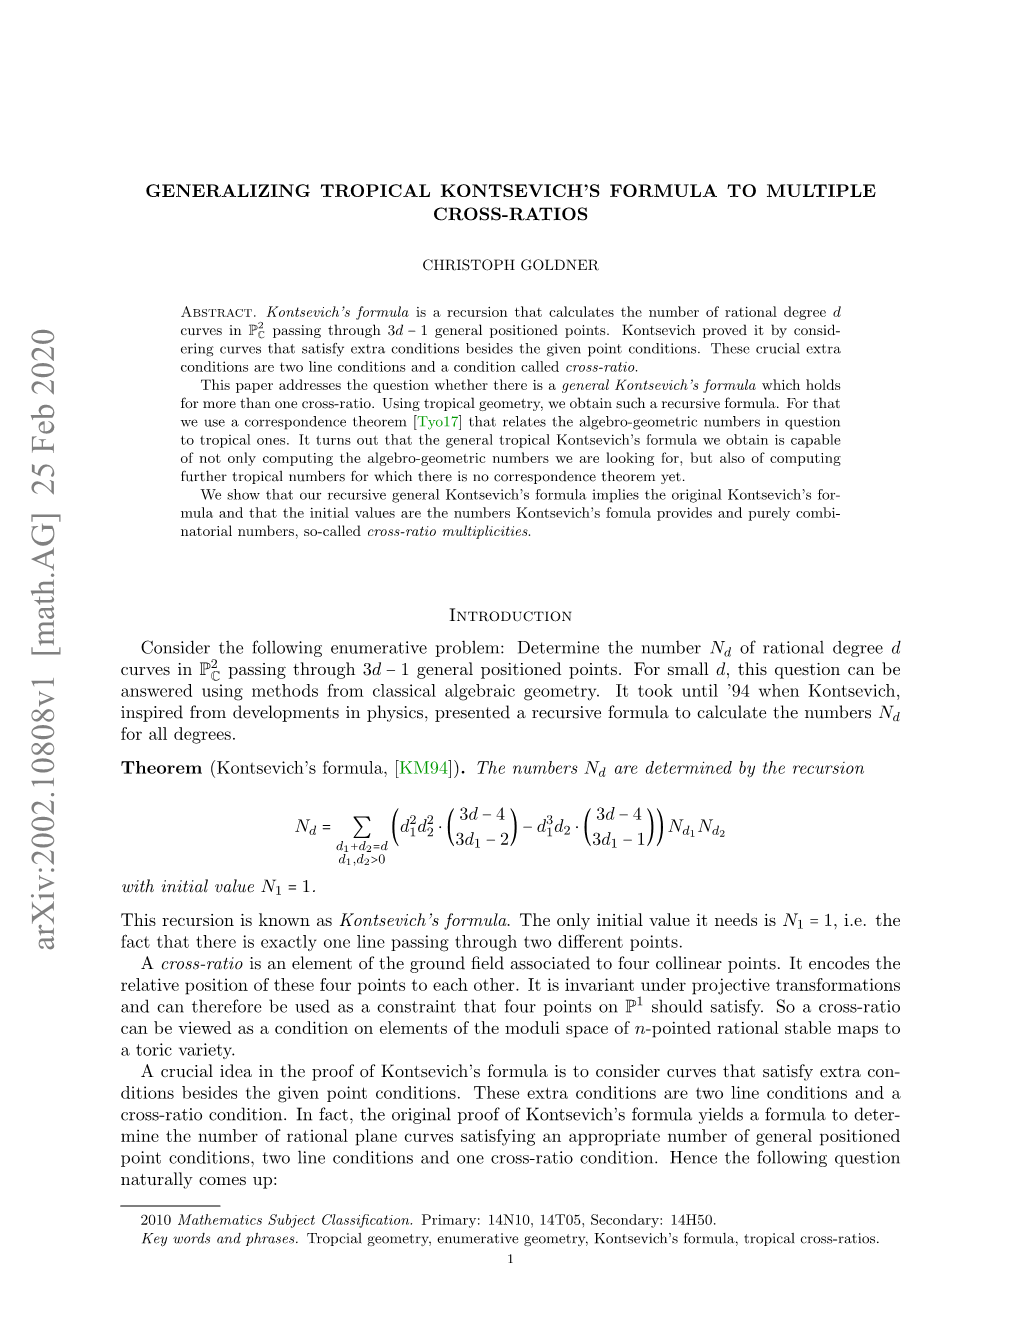 Generalizing Tropical Kontsevich's Formula to Multiple Cross-Ratios